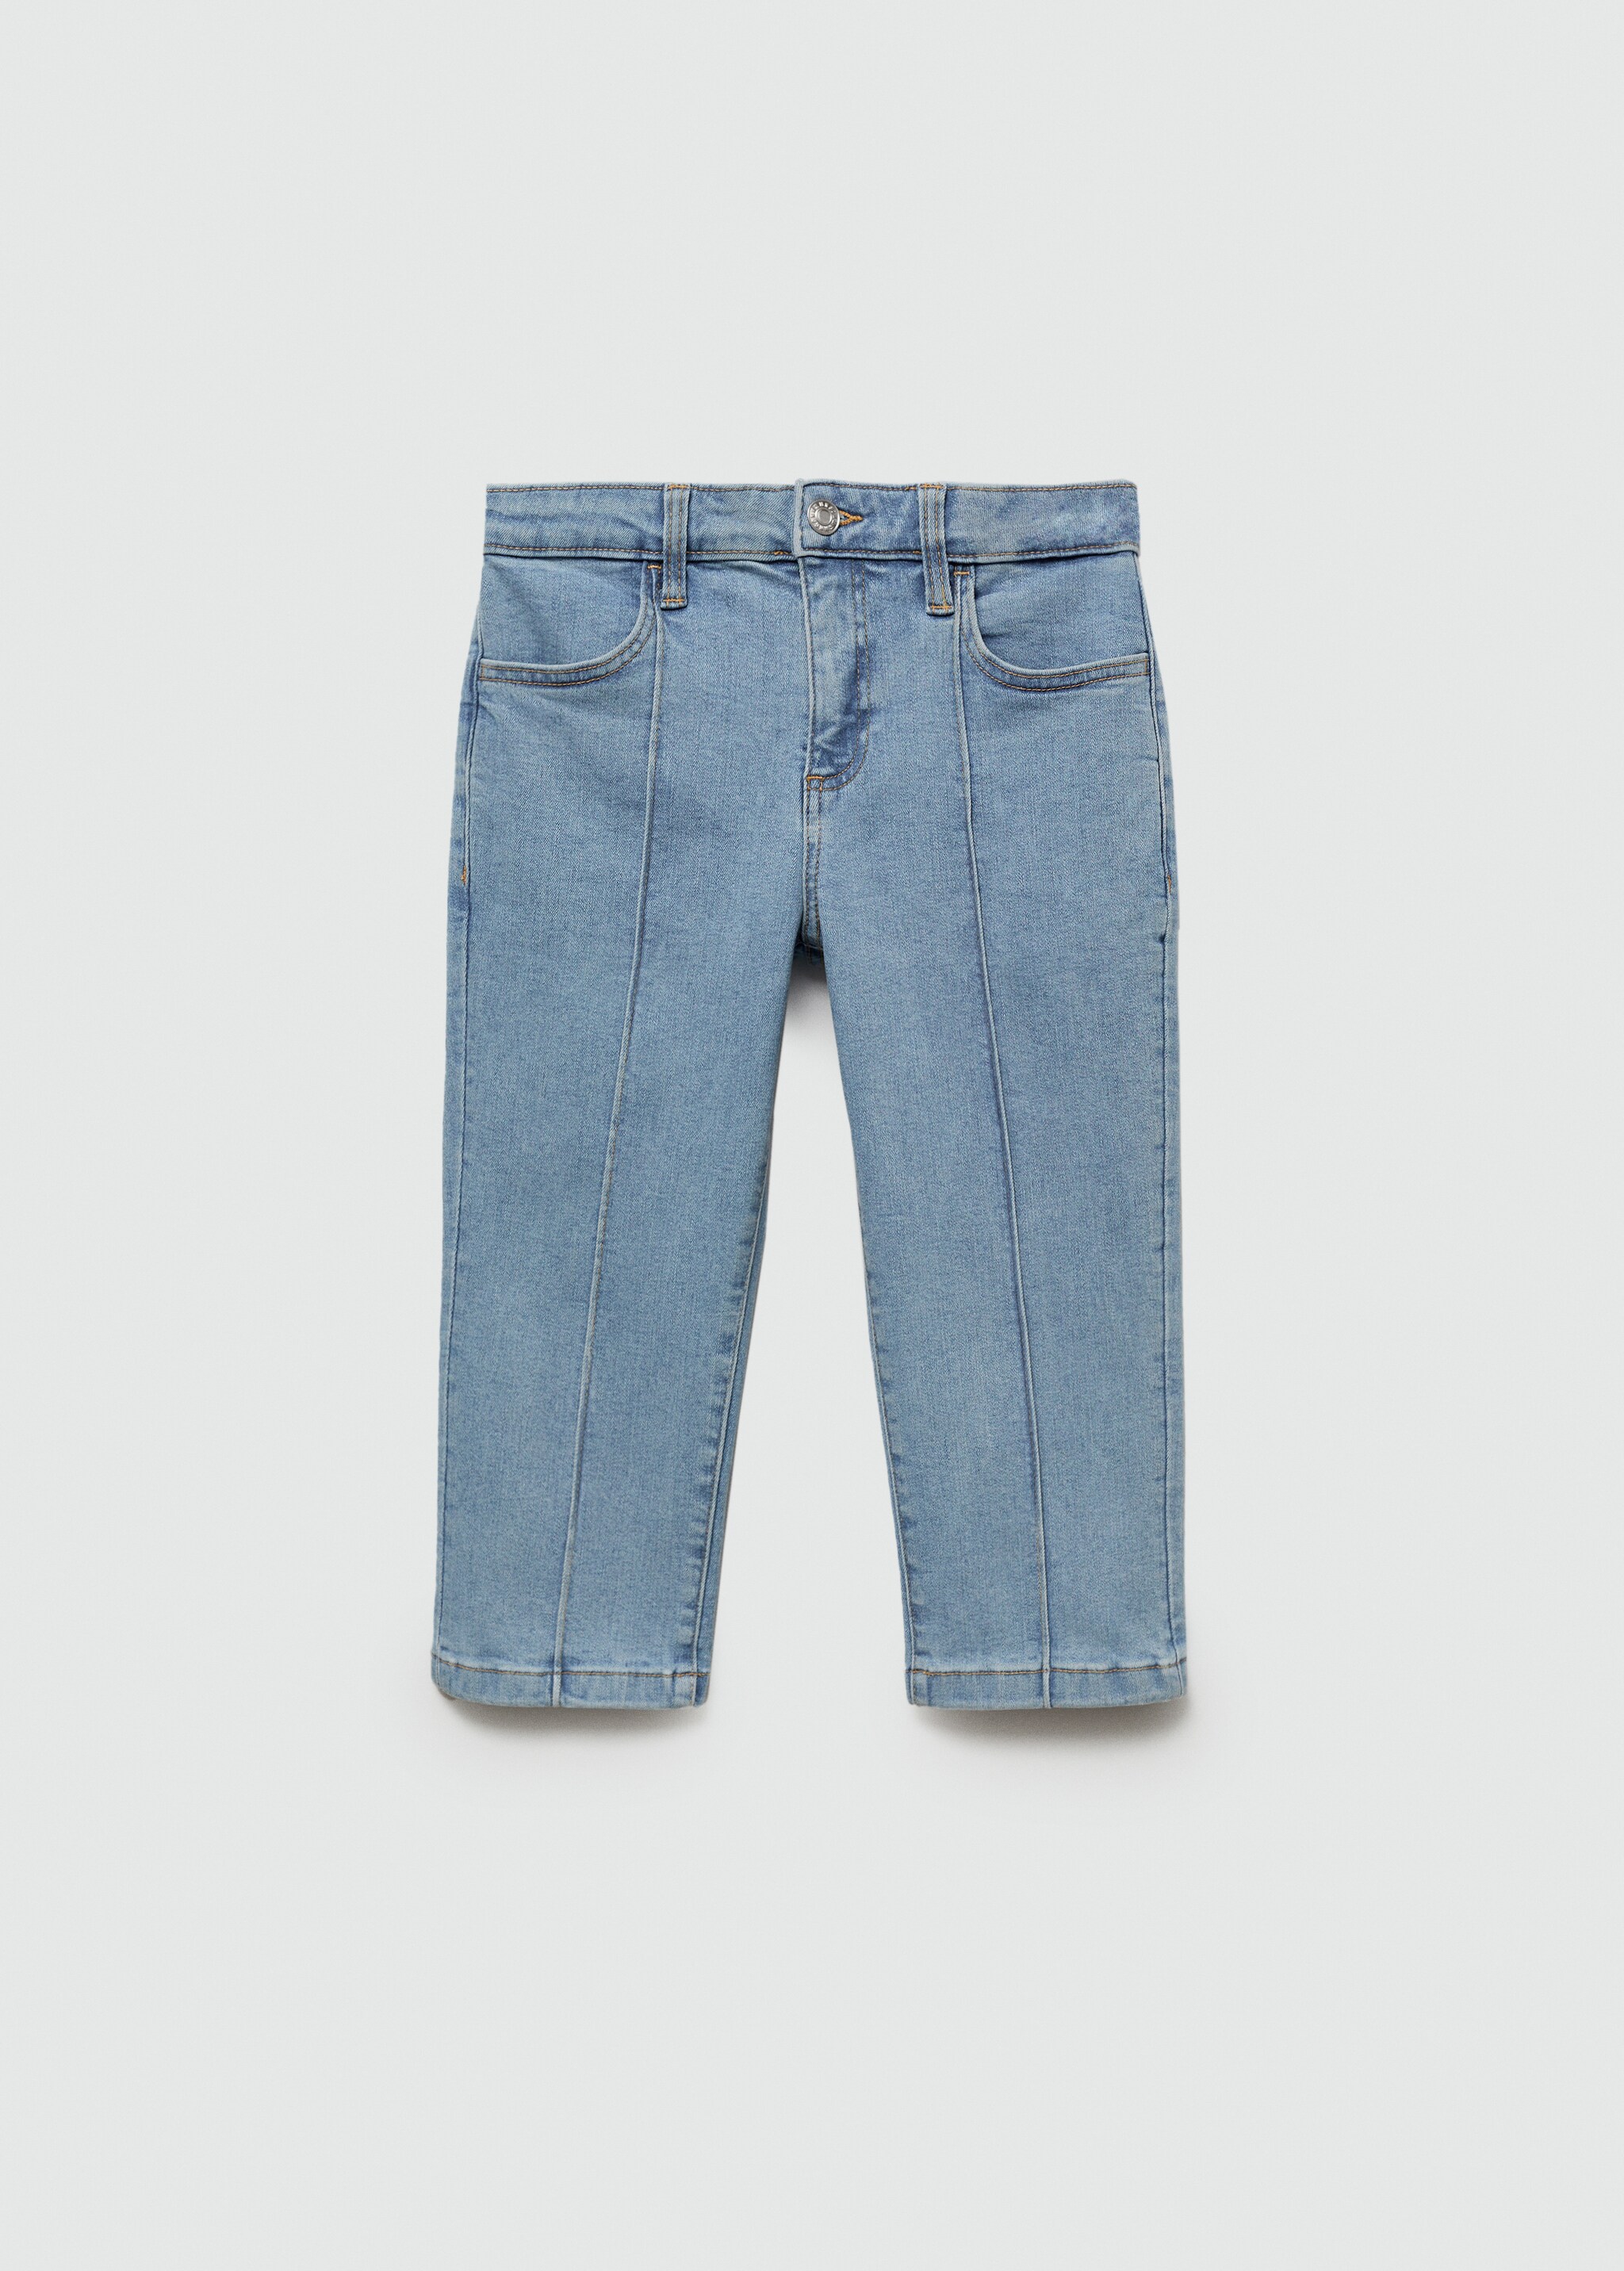 Slim capri jeans with decorative stitching - Изделие без модели